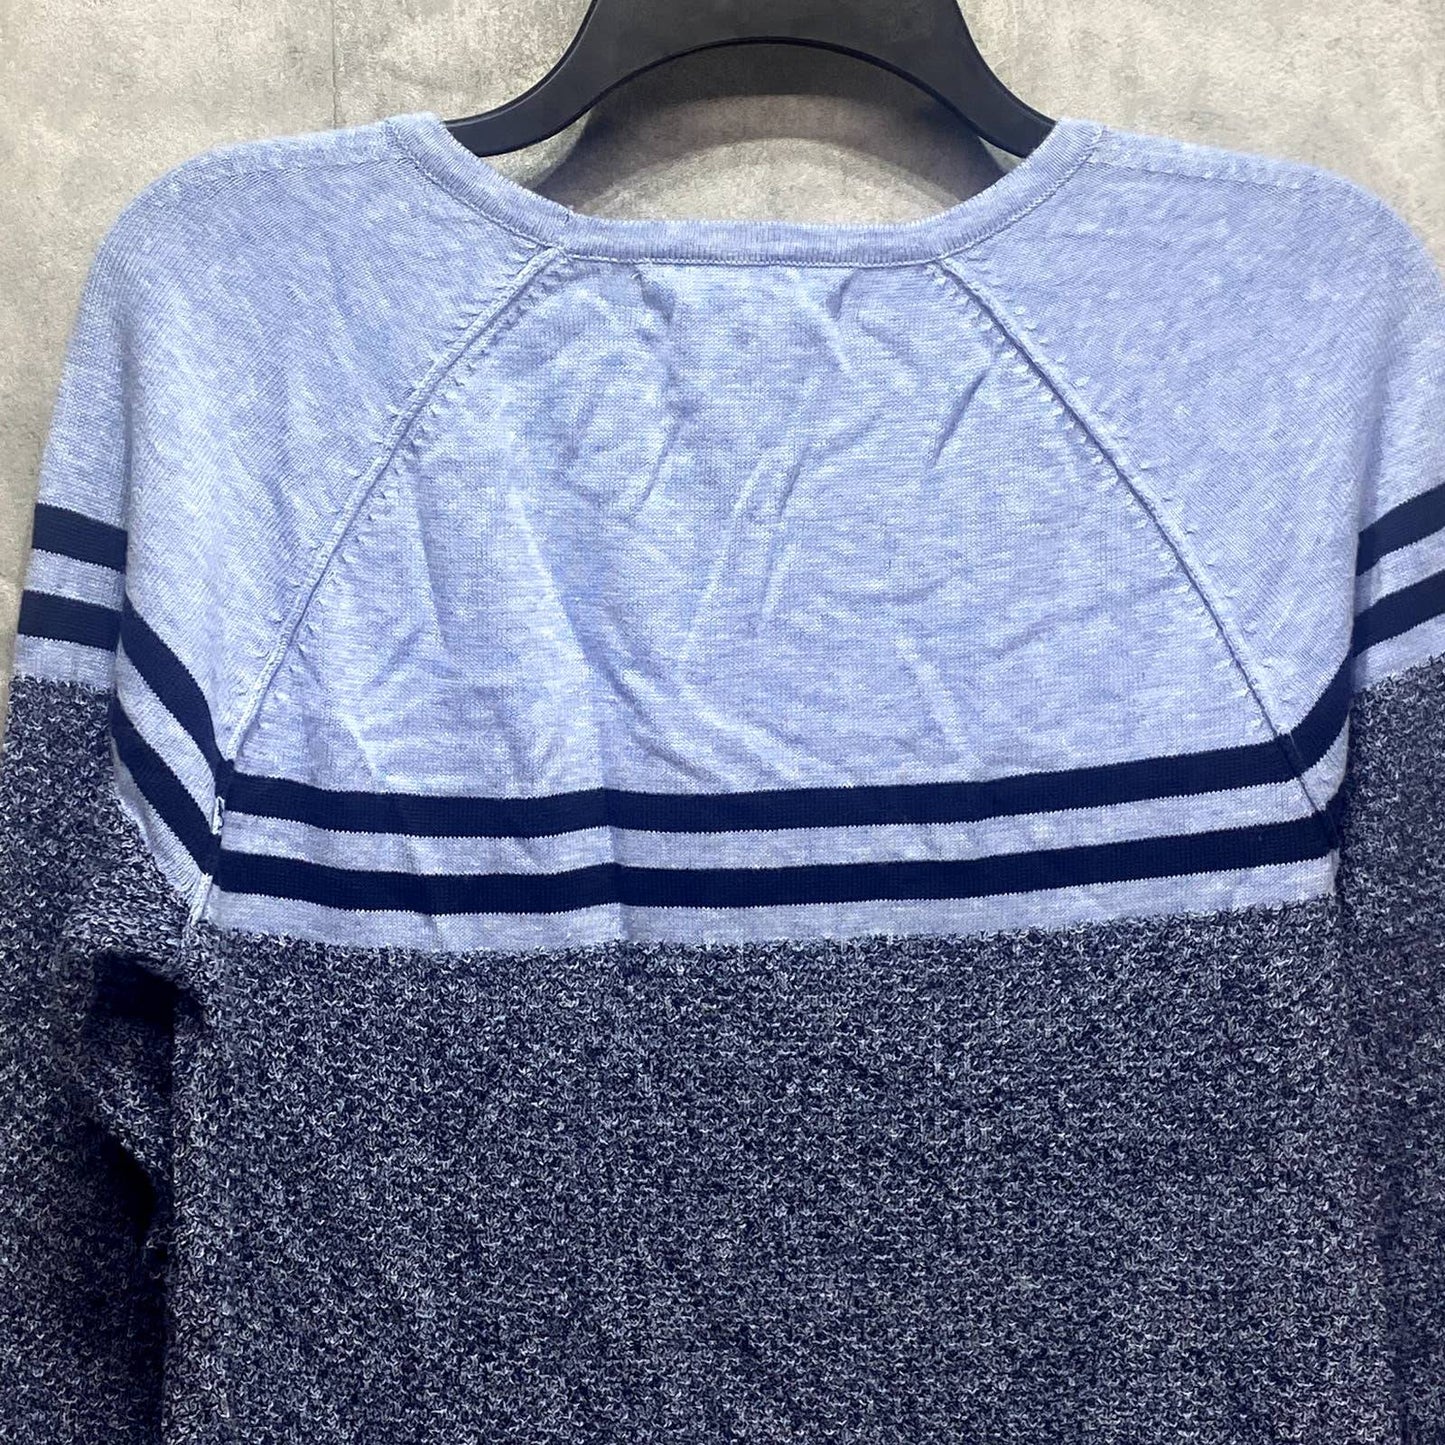 KAREN SCOTT Blue Marisa Cotton Colorblock Textured Curve-Hem Pullover Sweater SZ S